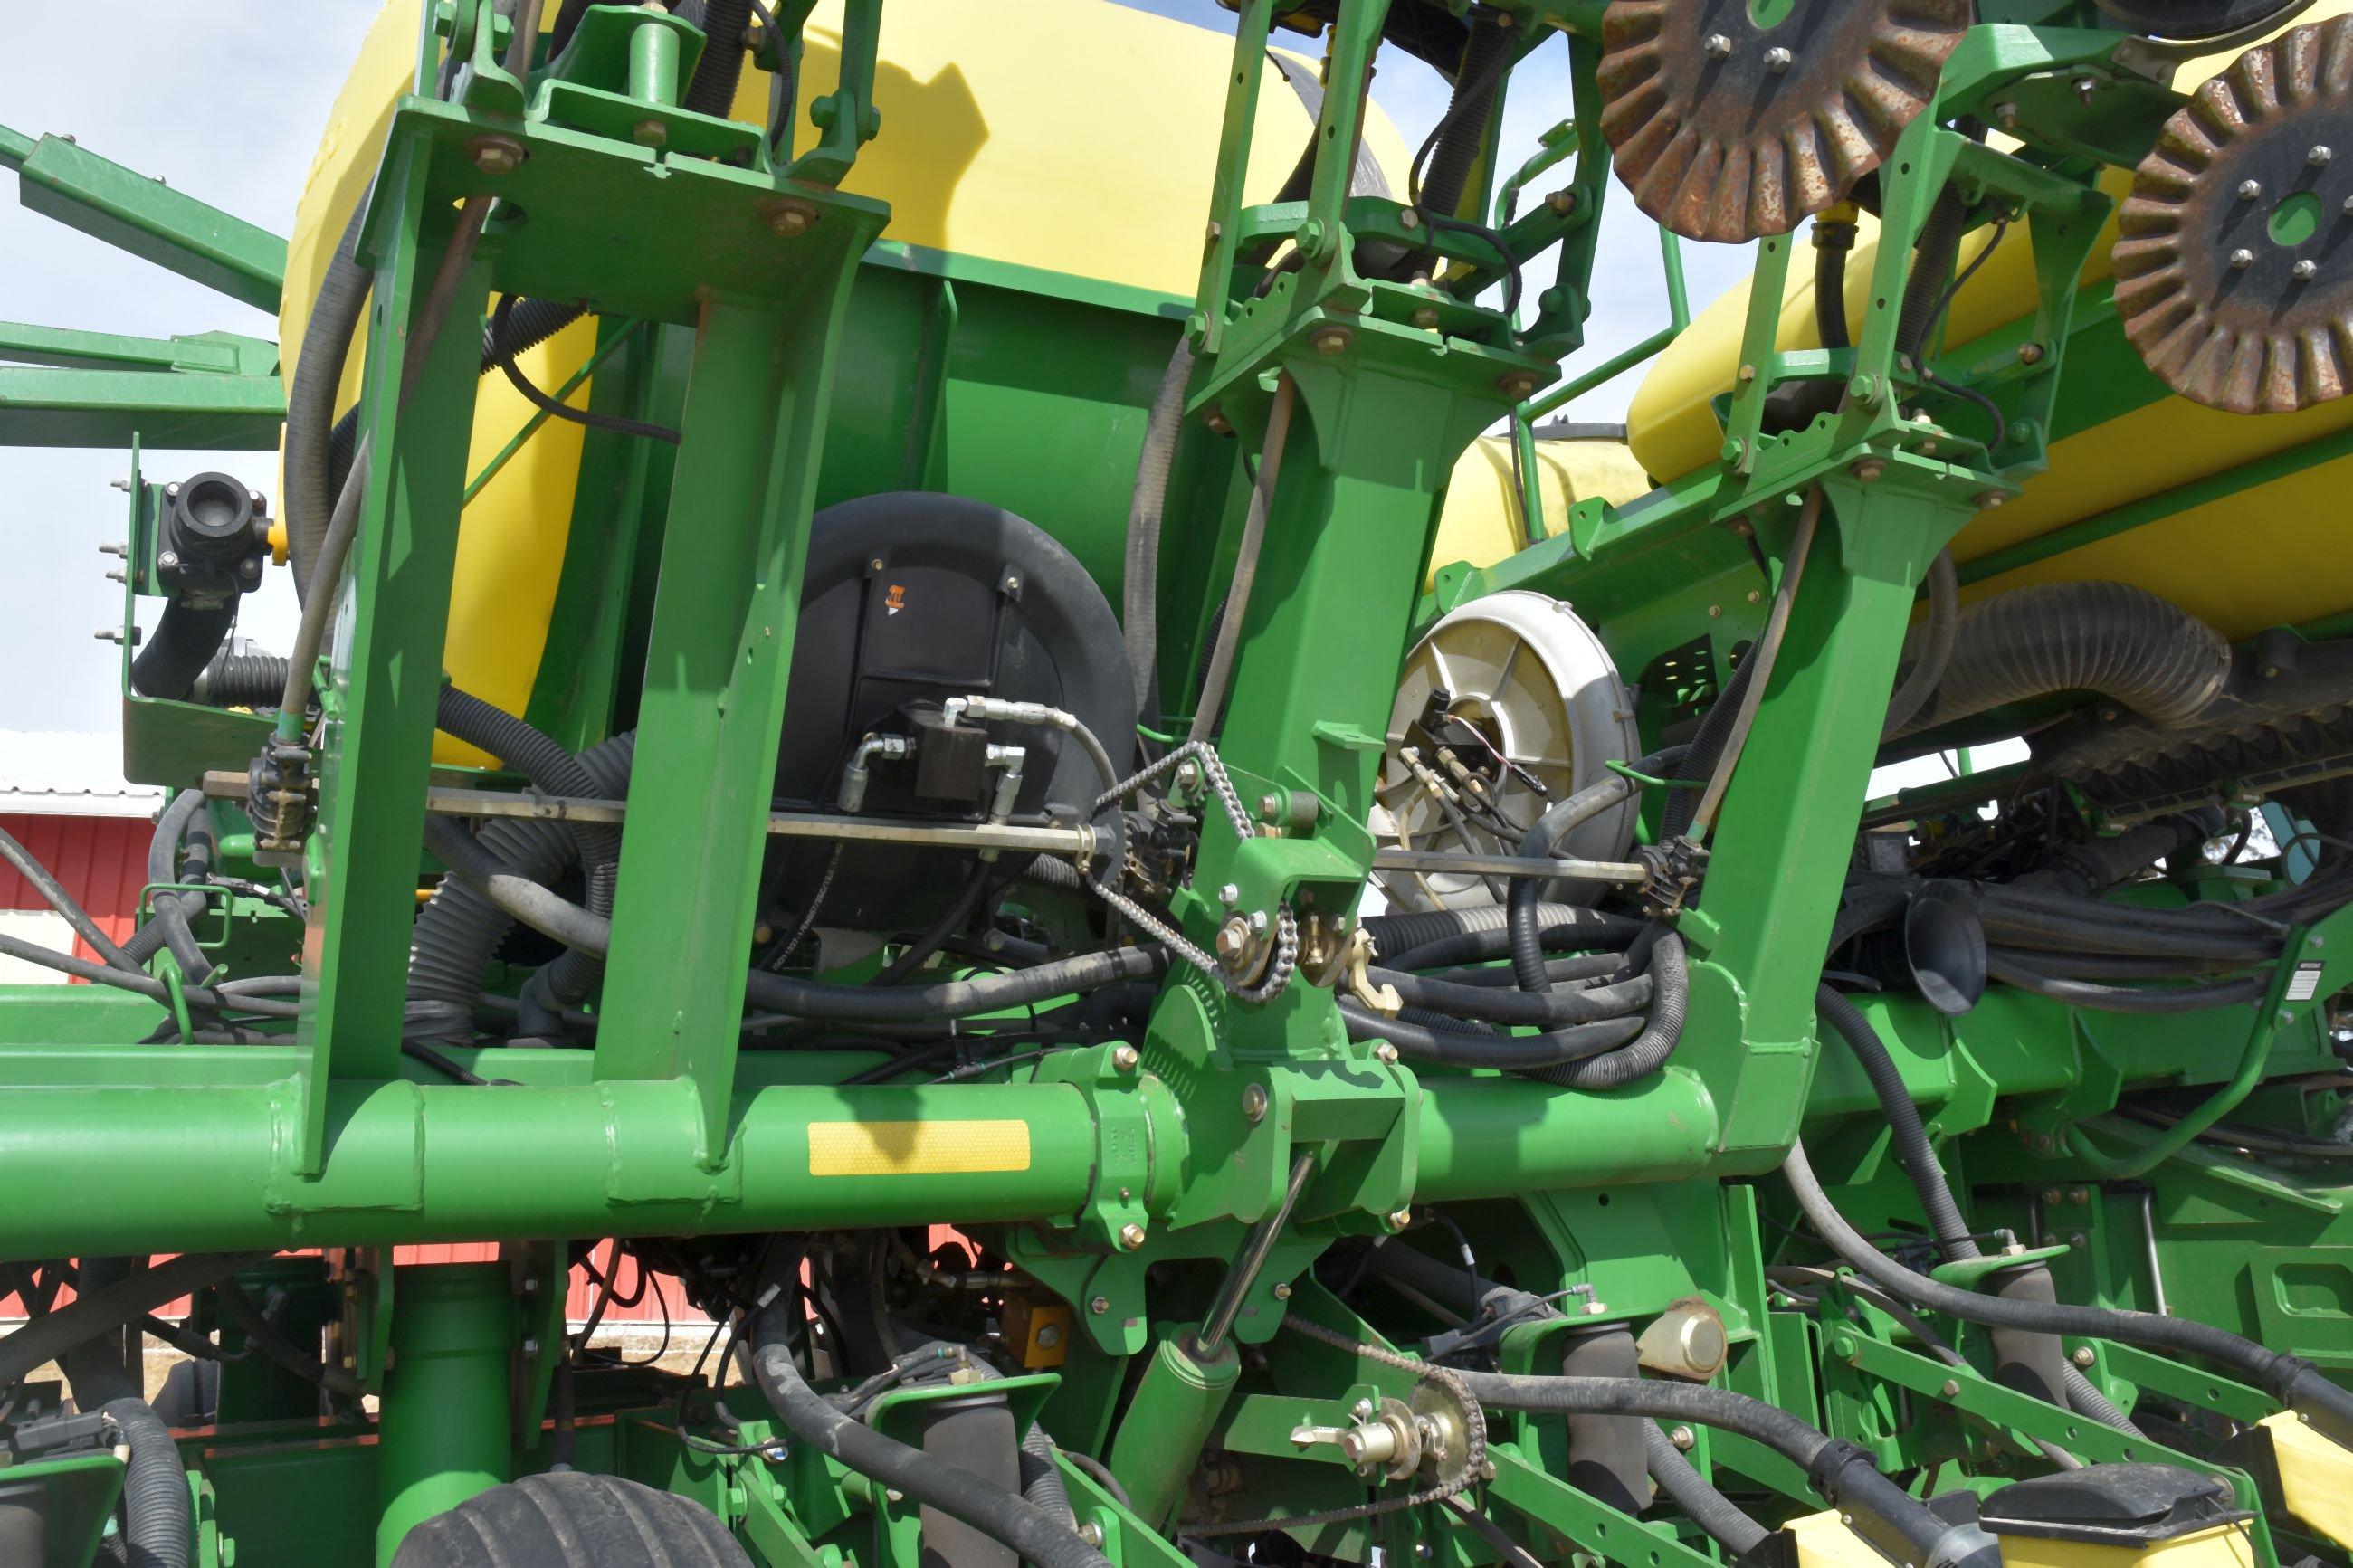 2010 John Deere 1790 CCS Planter, 12 Row 30” or 23 Row 15”, Liquid Fertilizer With 420 Gallon Poly T